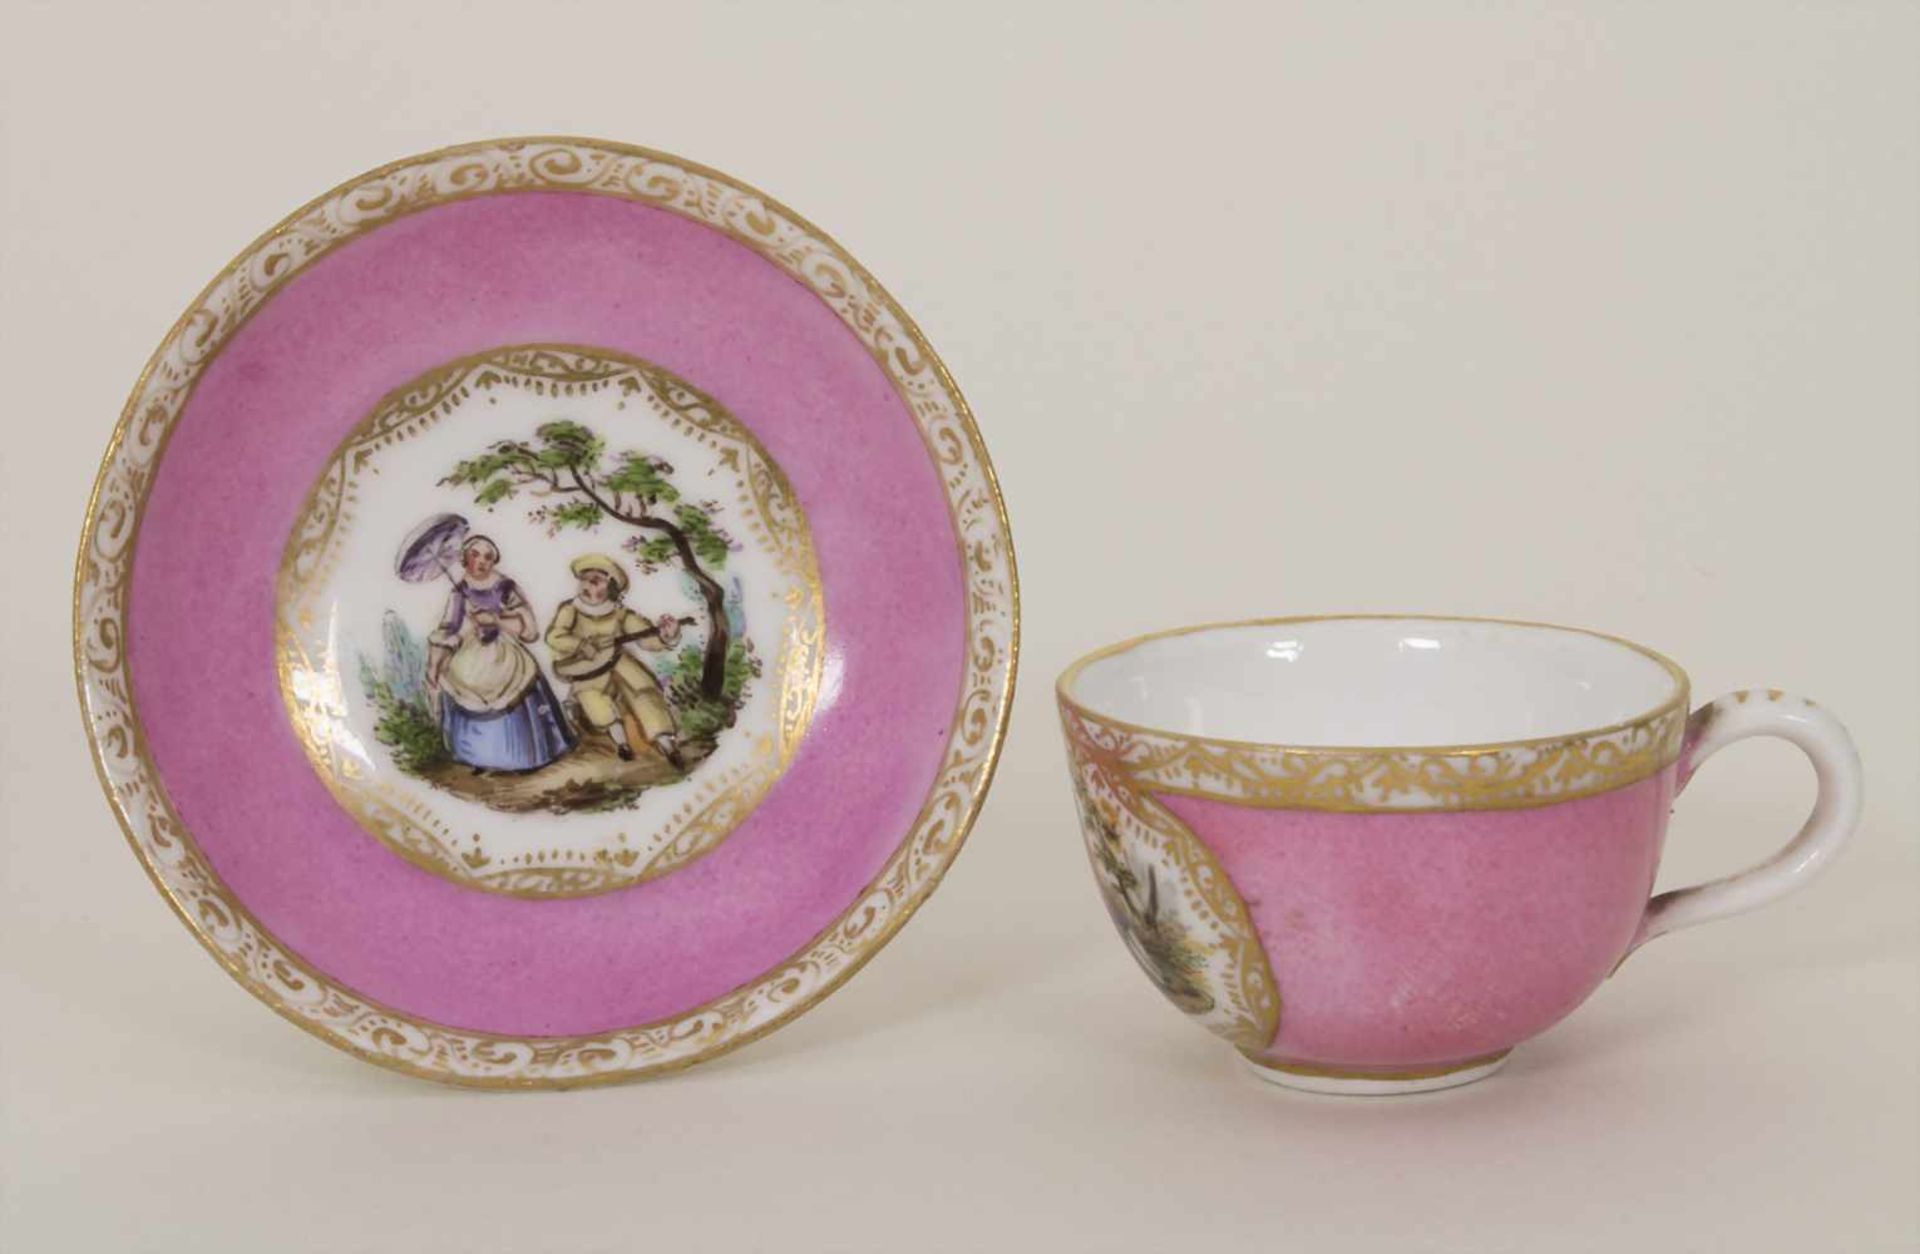 Miniatur Tasse und Untertasse mit galanten Szenen / A miniature cup and saucer with courteous - Image 2 of 3